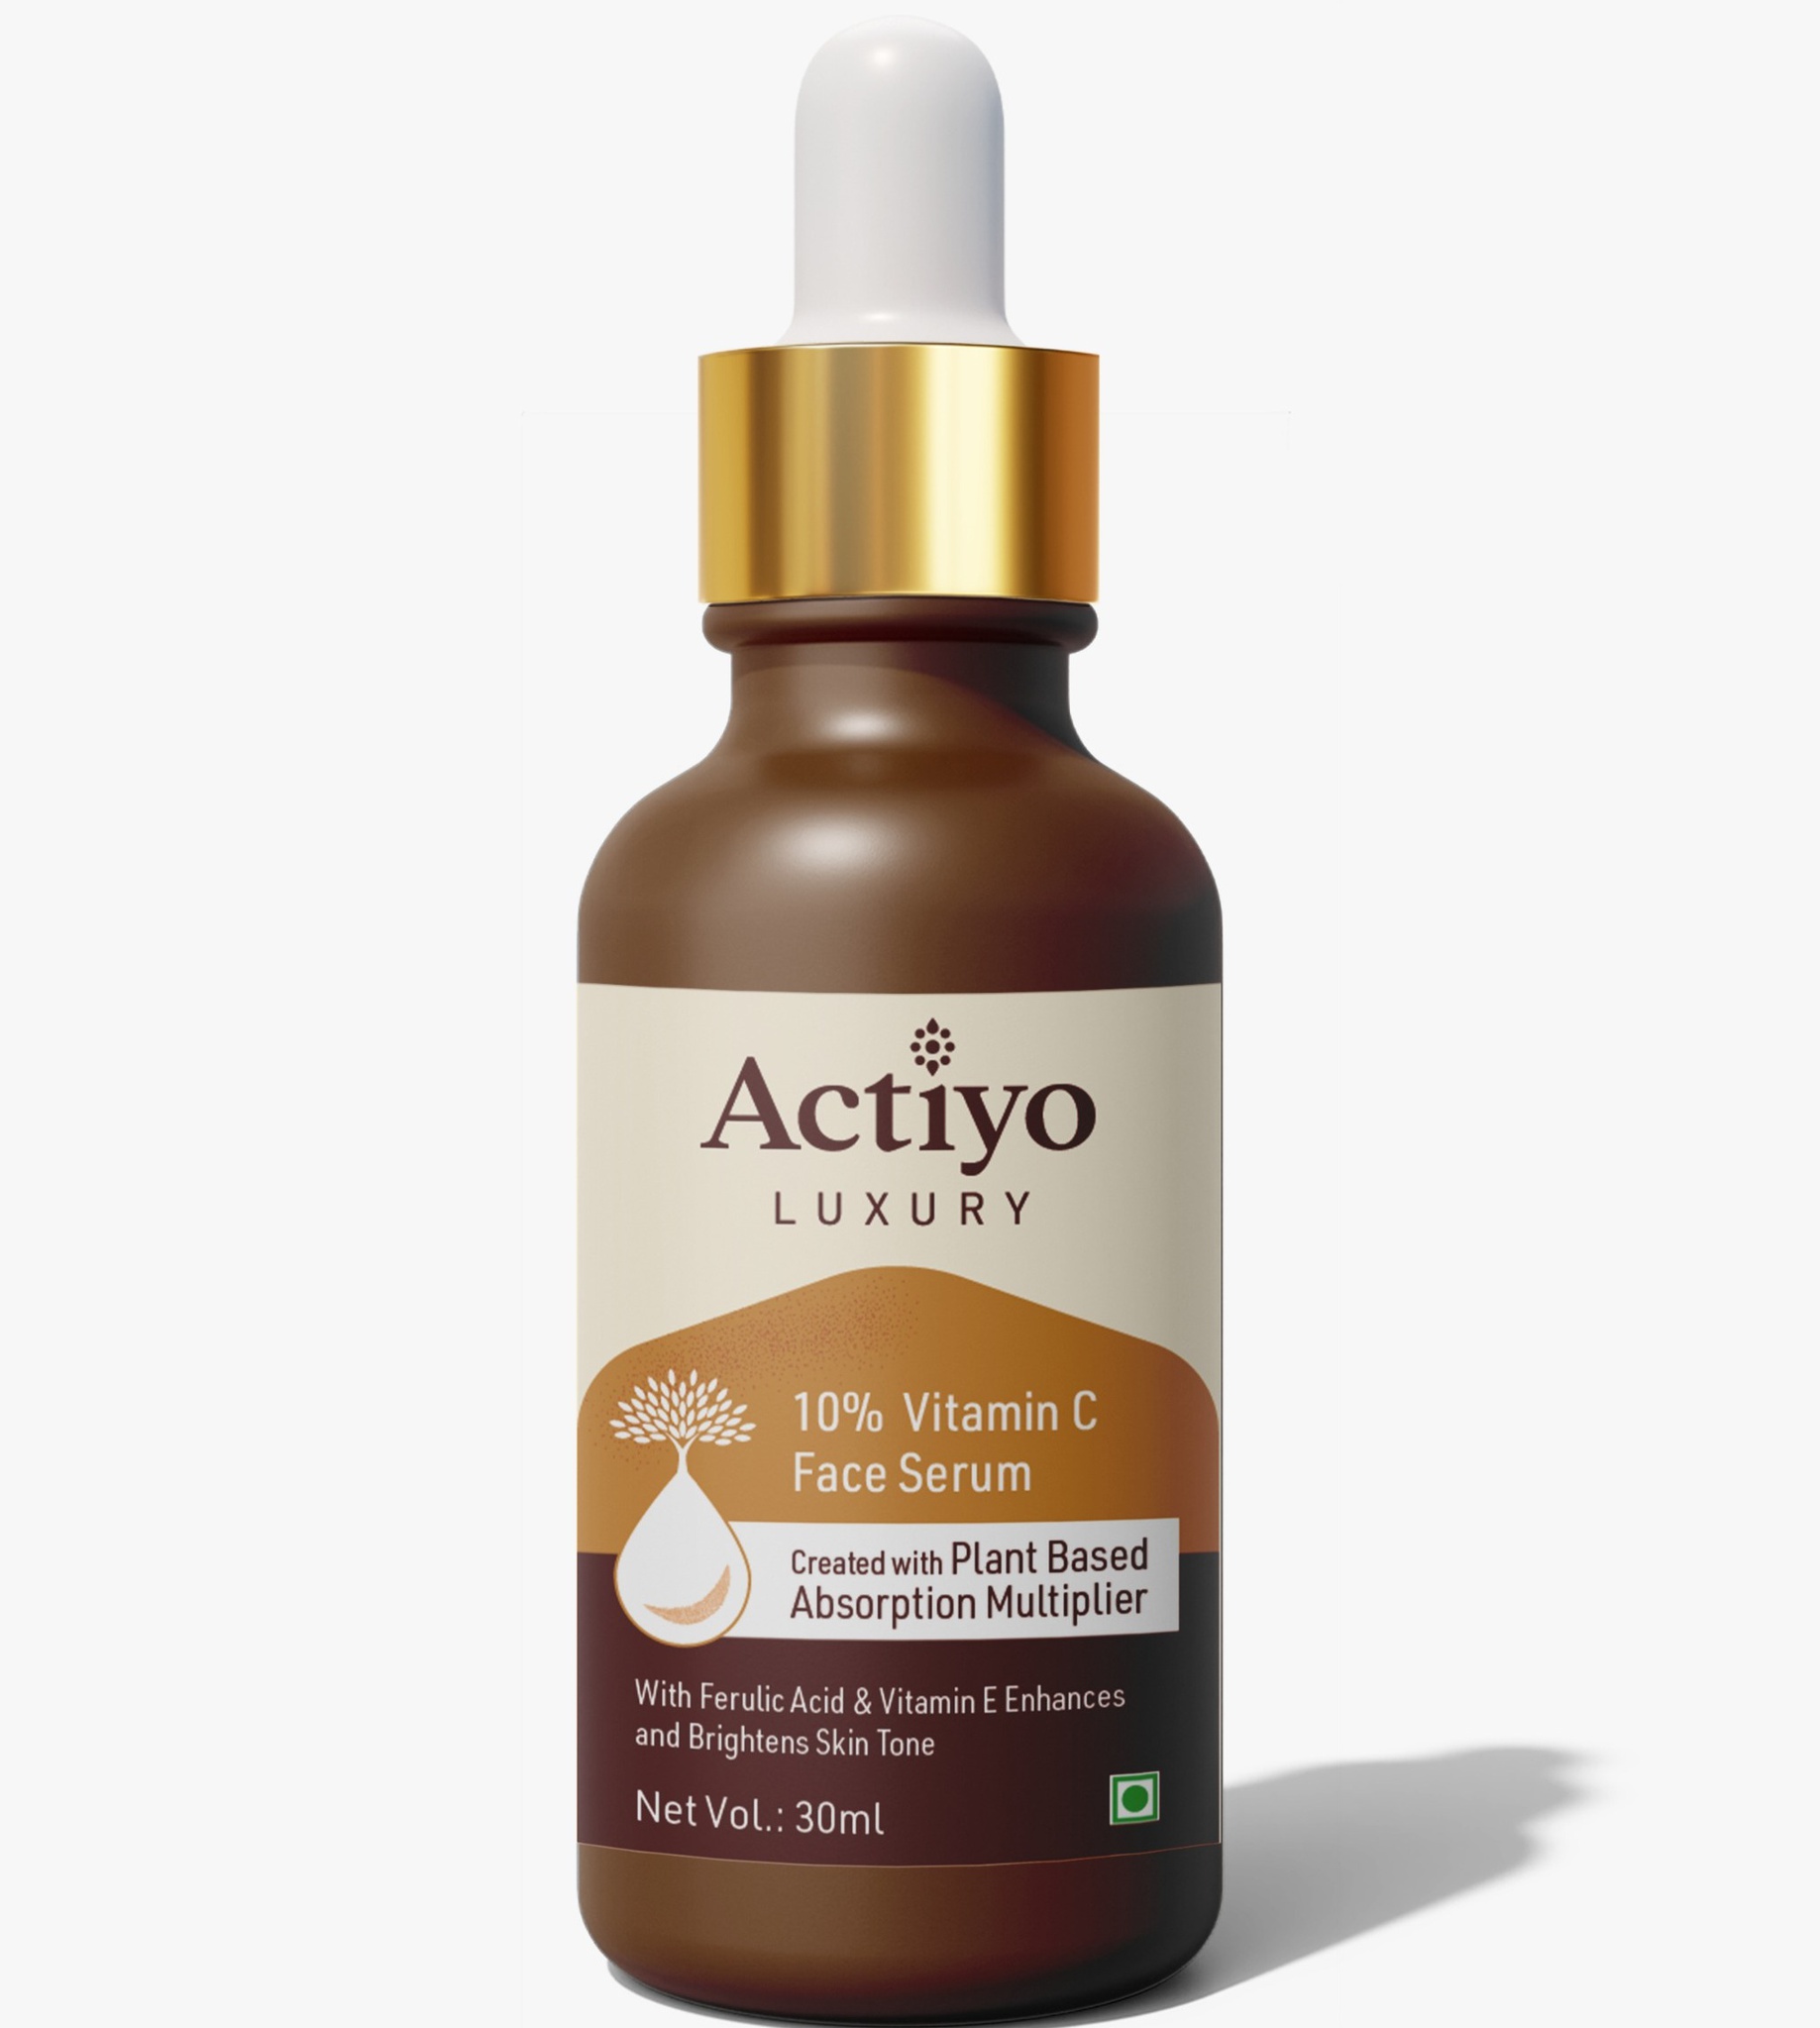 Actiyo Luxury 10% Vitamin C Face Serum Created With Plant Based Absorption Multiplier